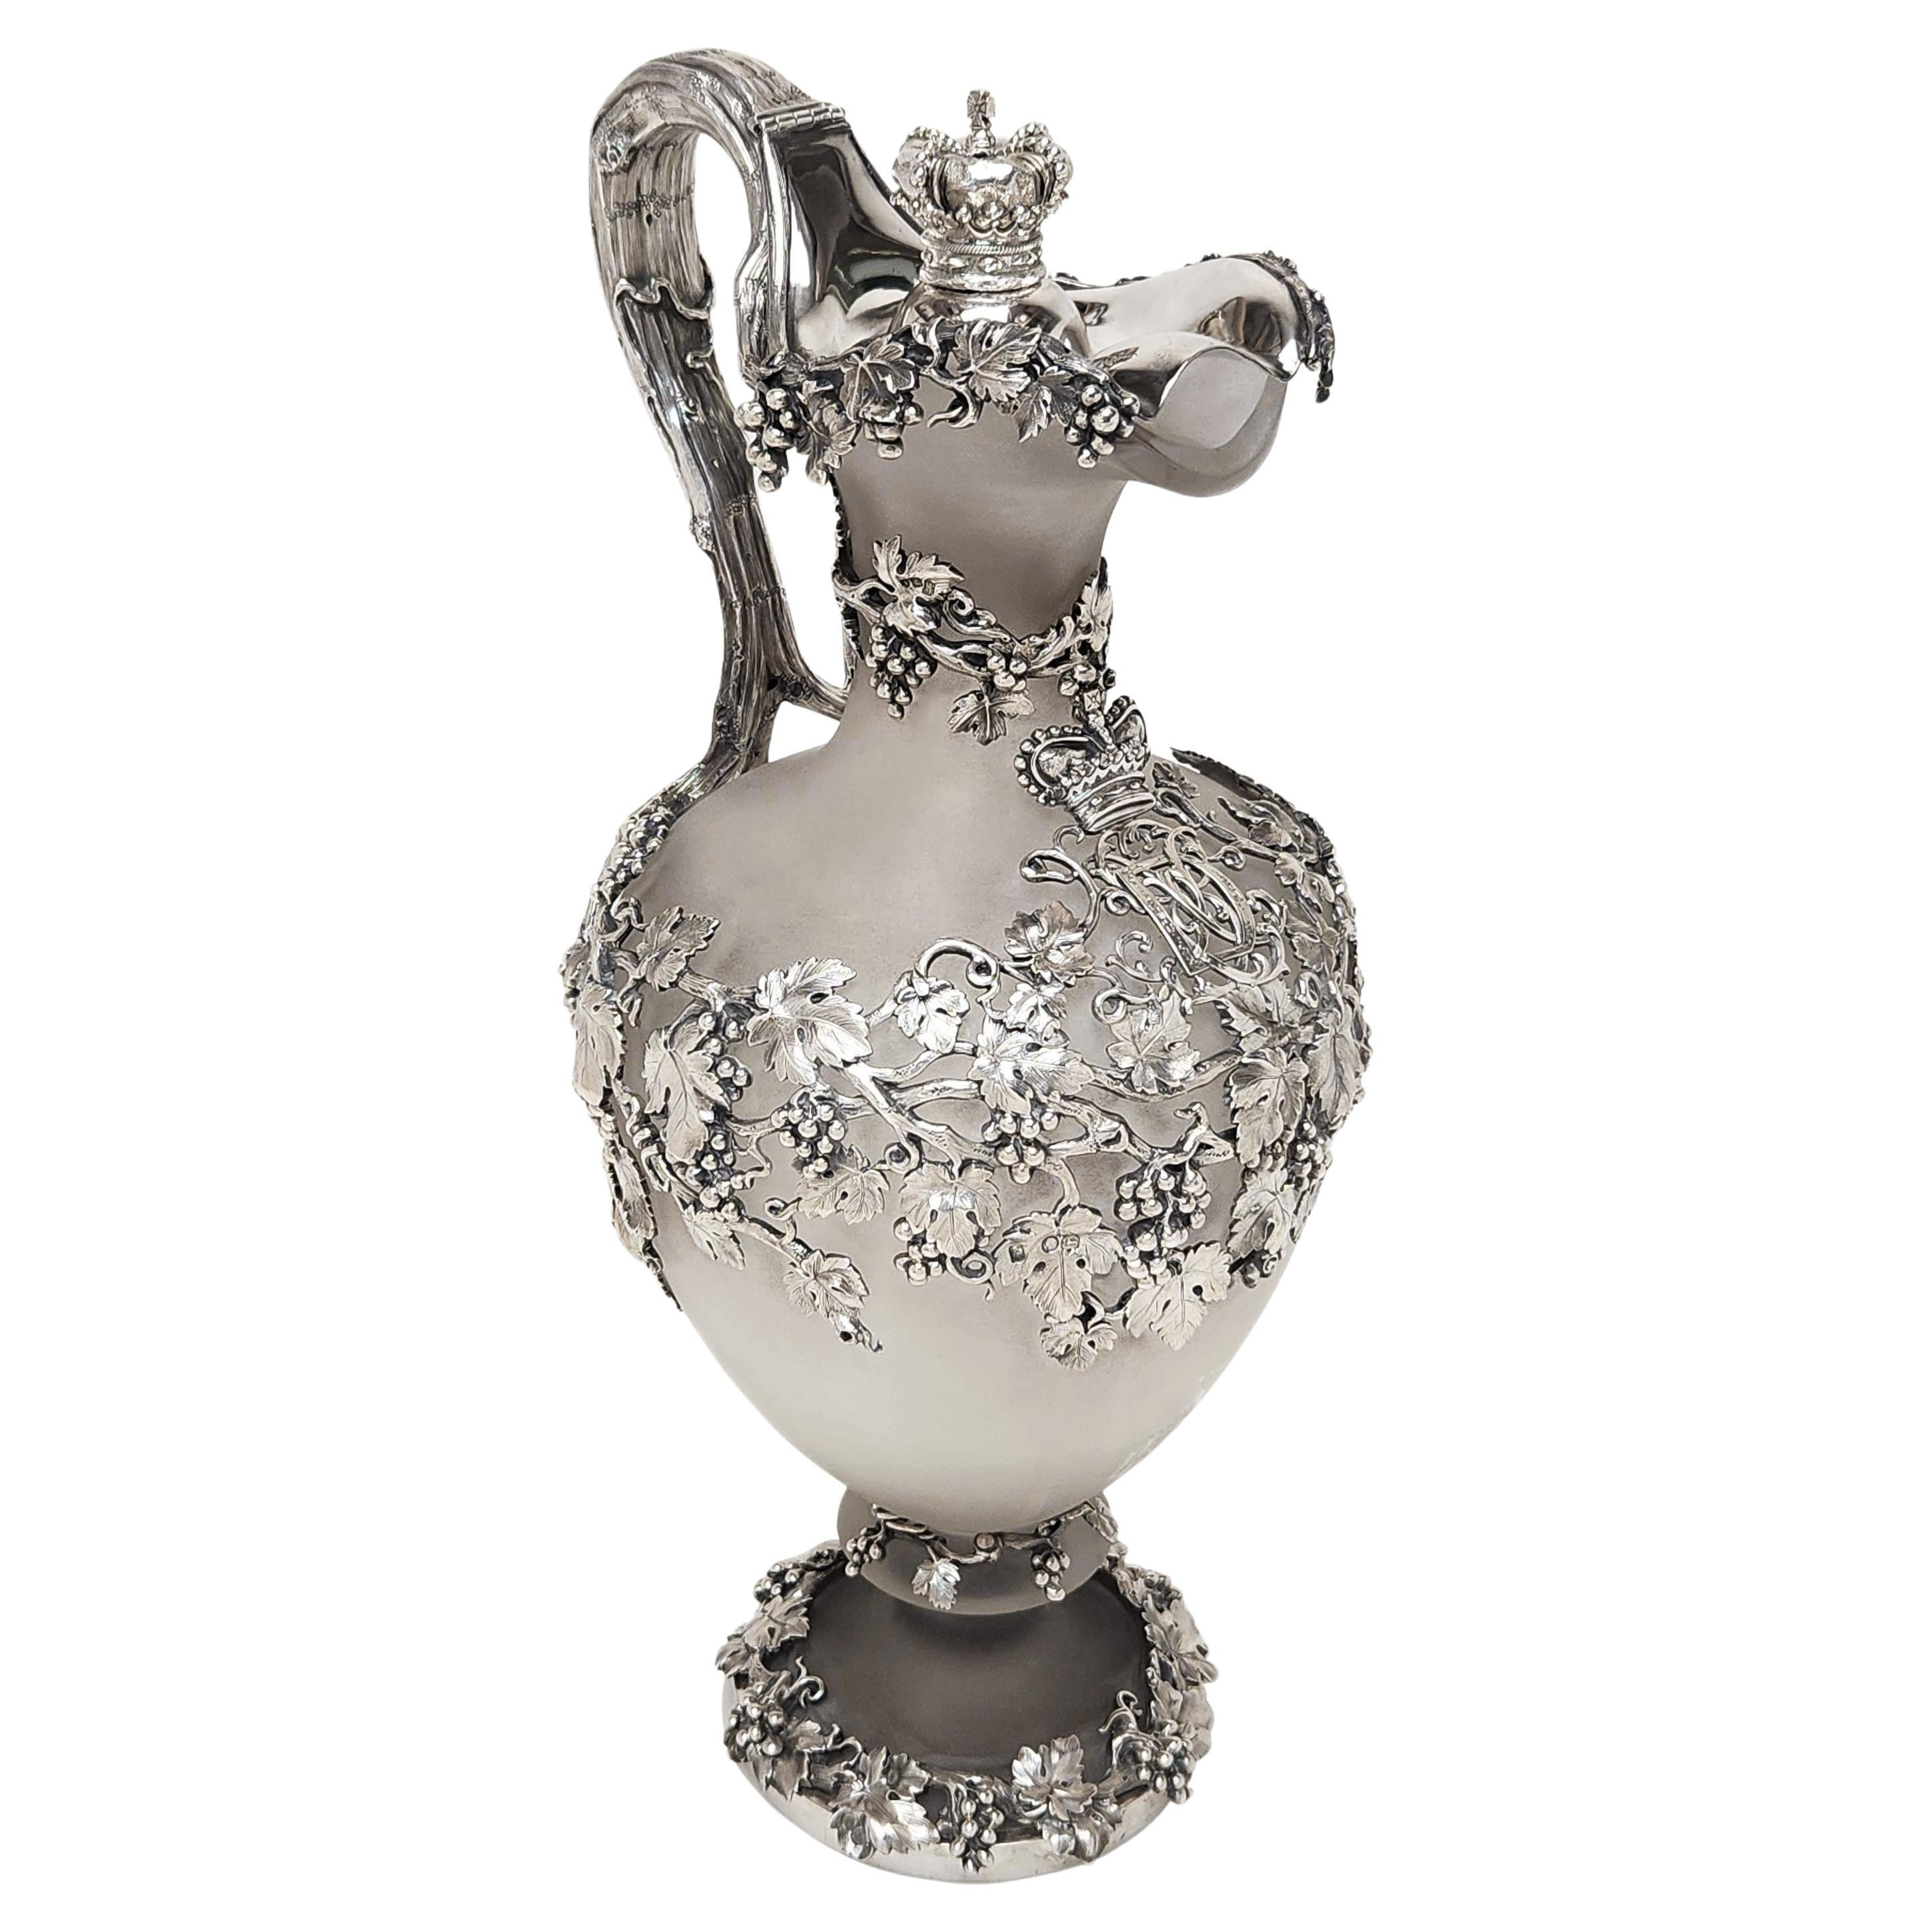 Large Antique Silver & Glass Claret Jug / Wine Ewer London, England 1843